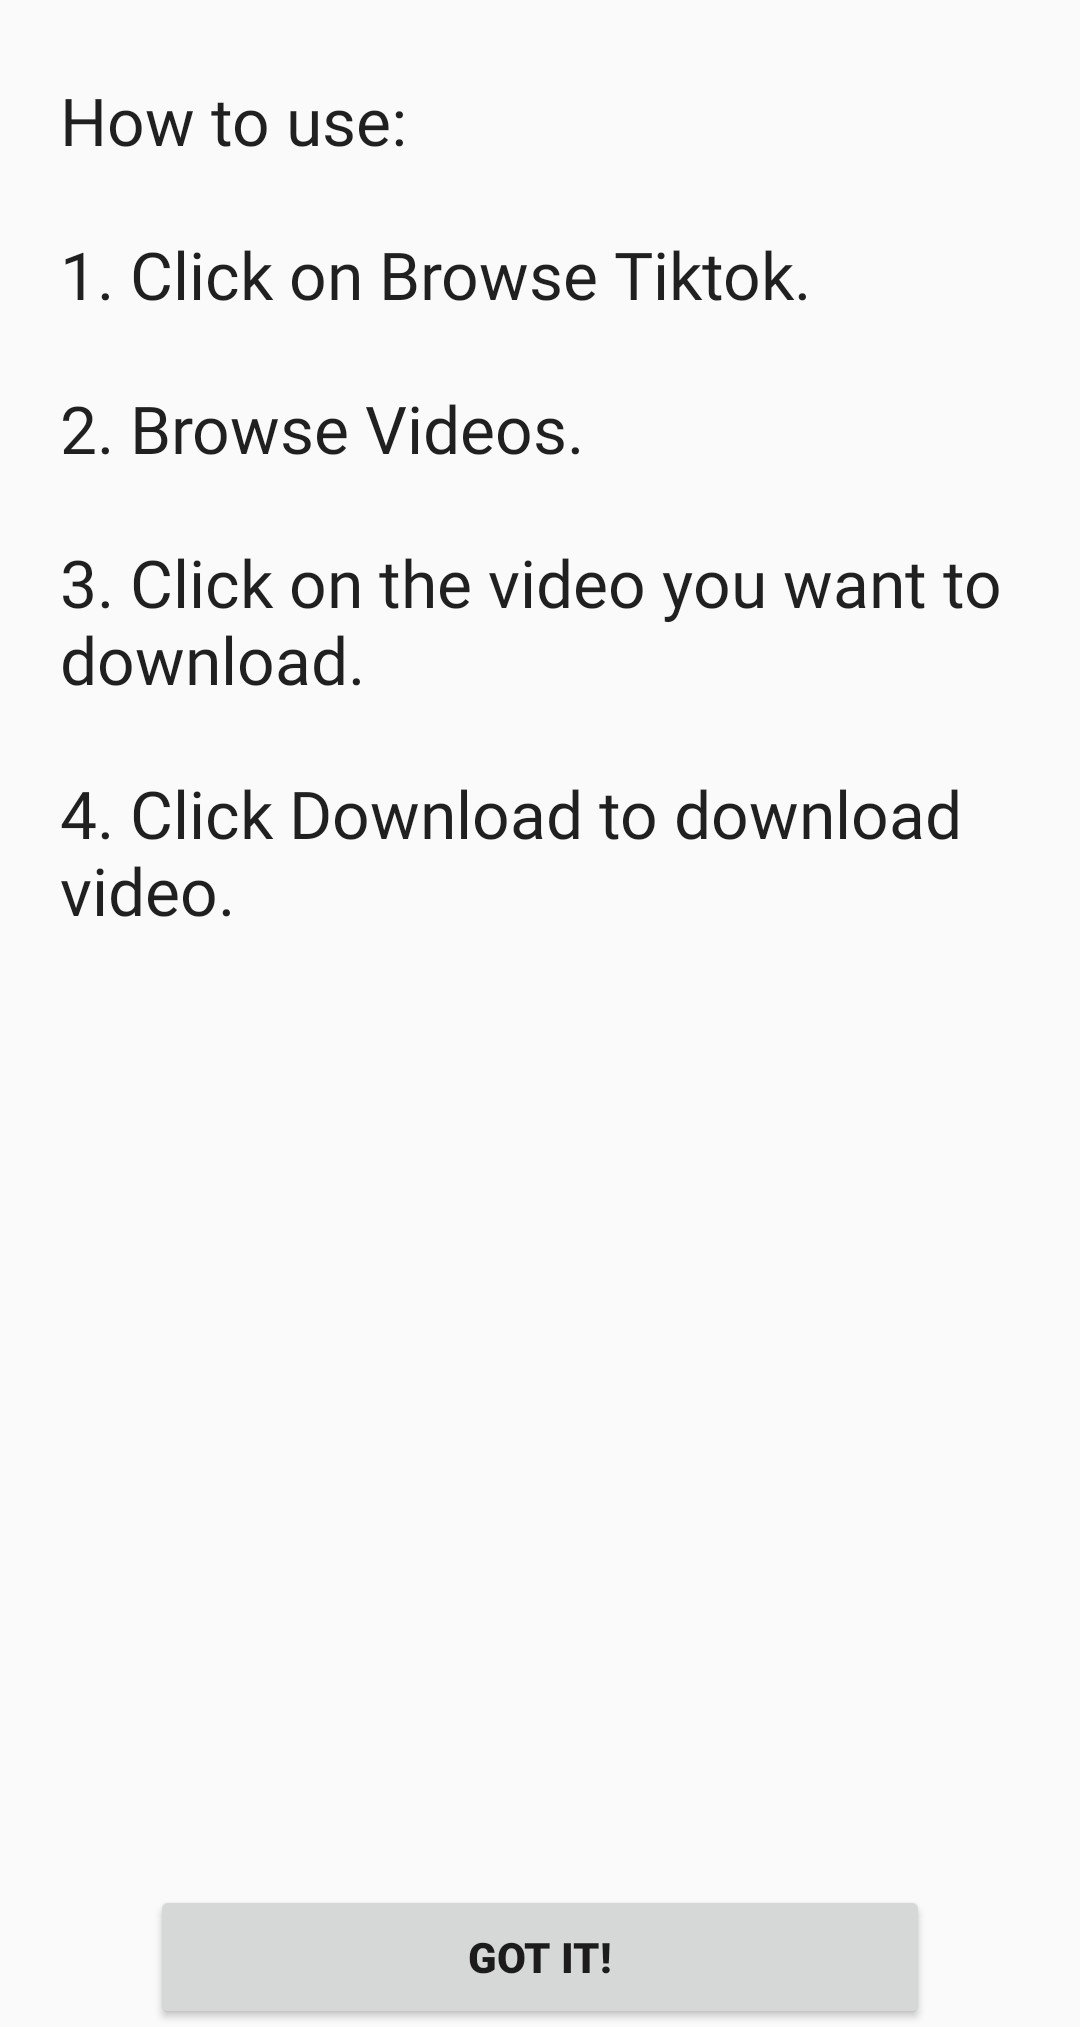 tiktok video downloader